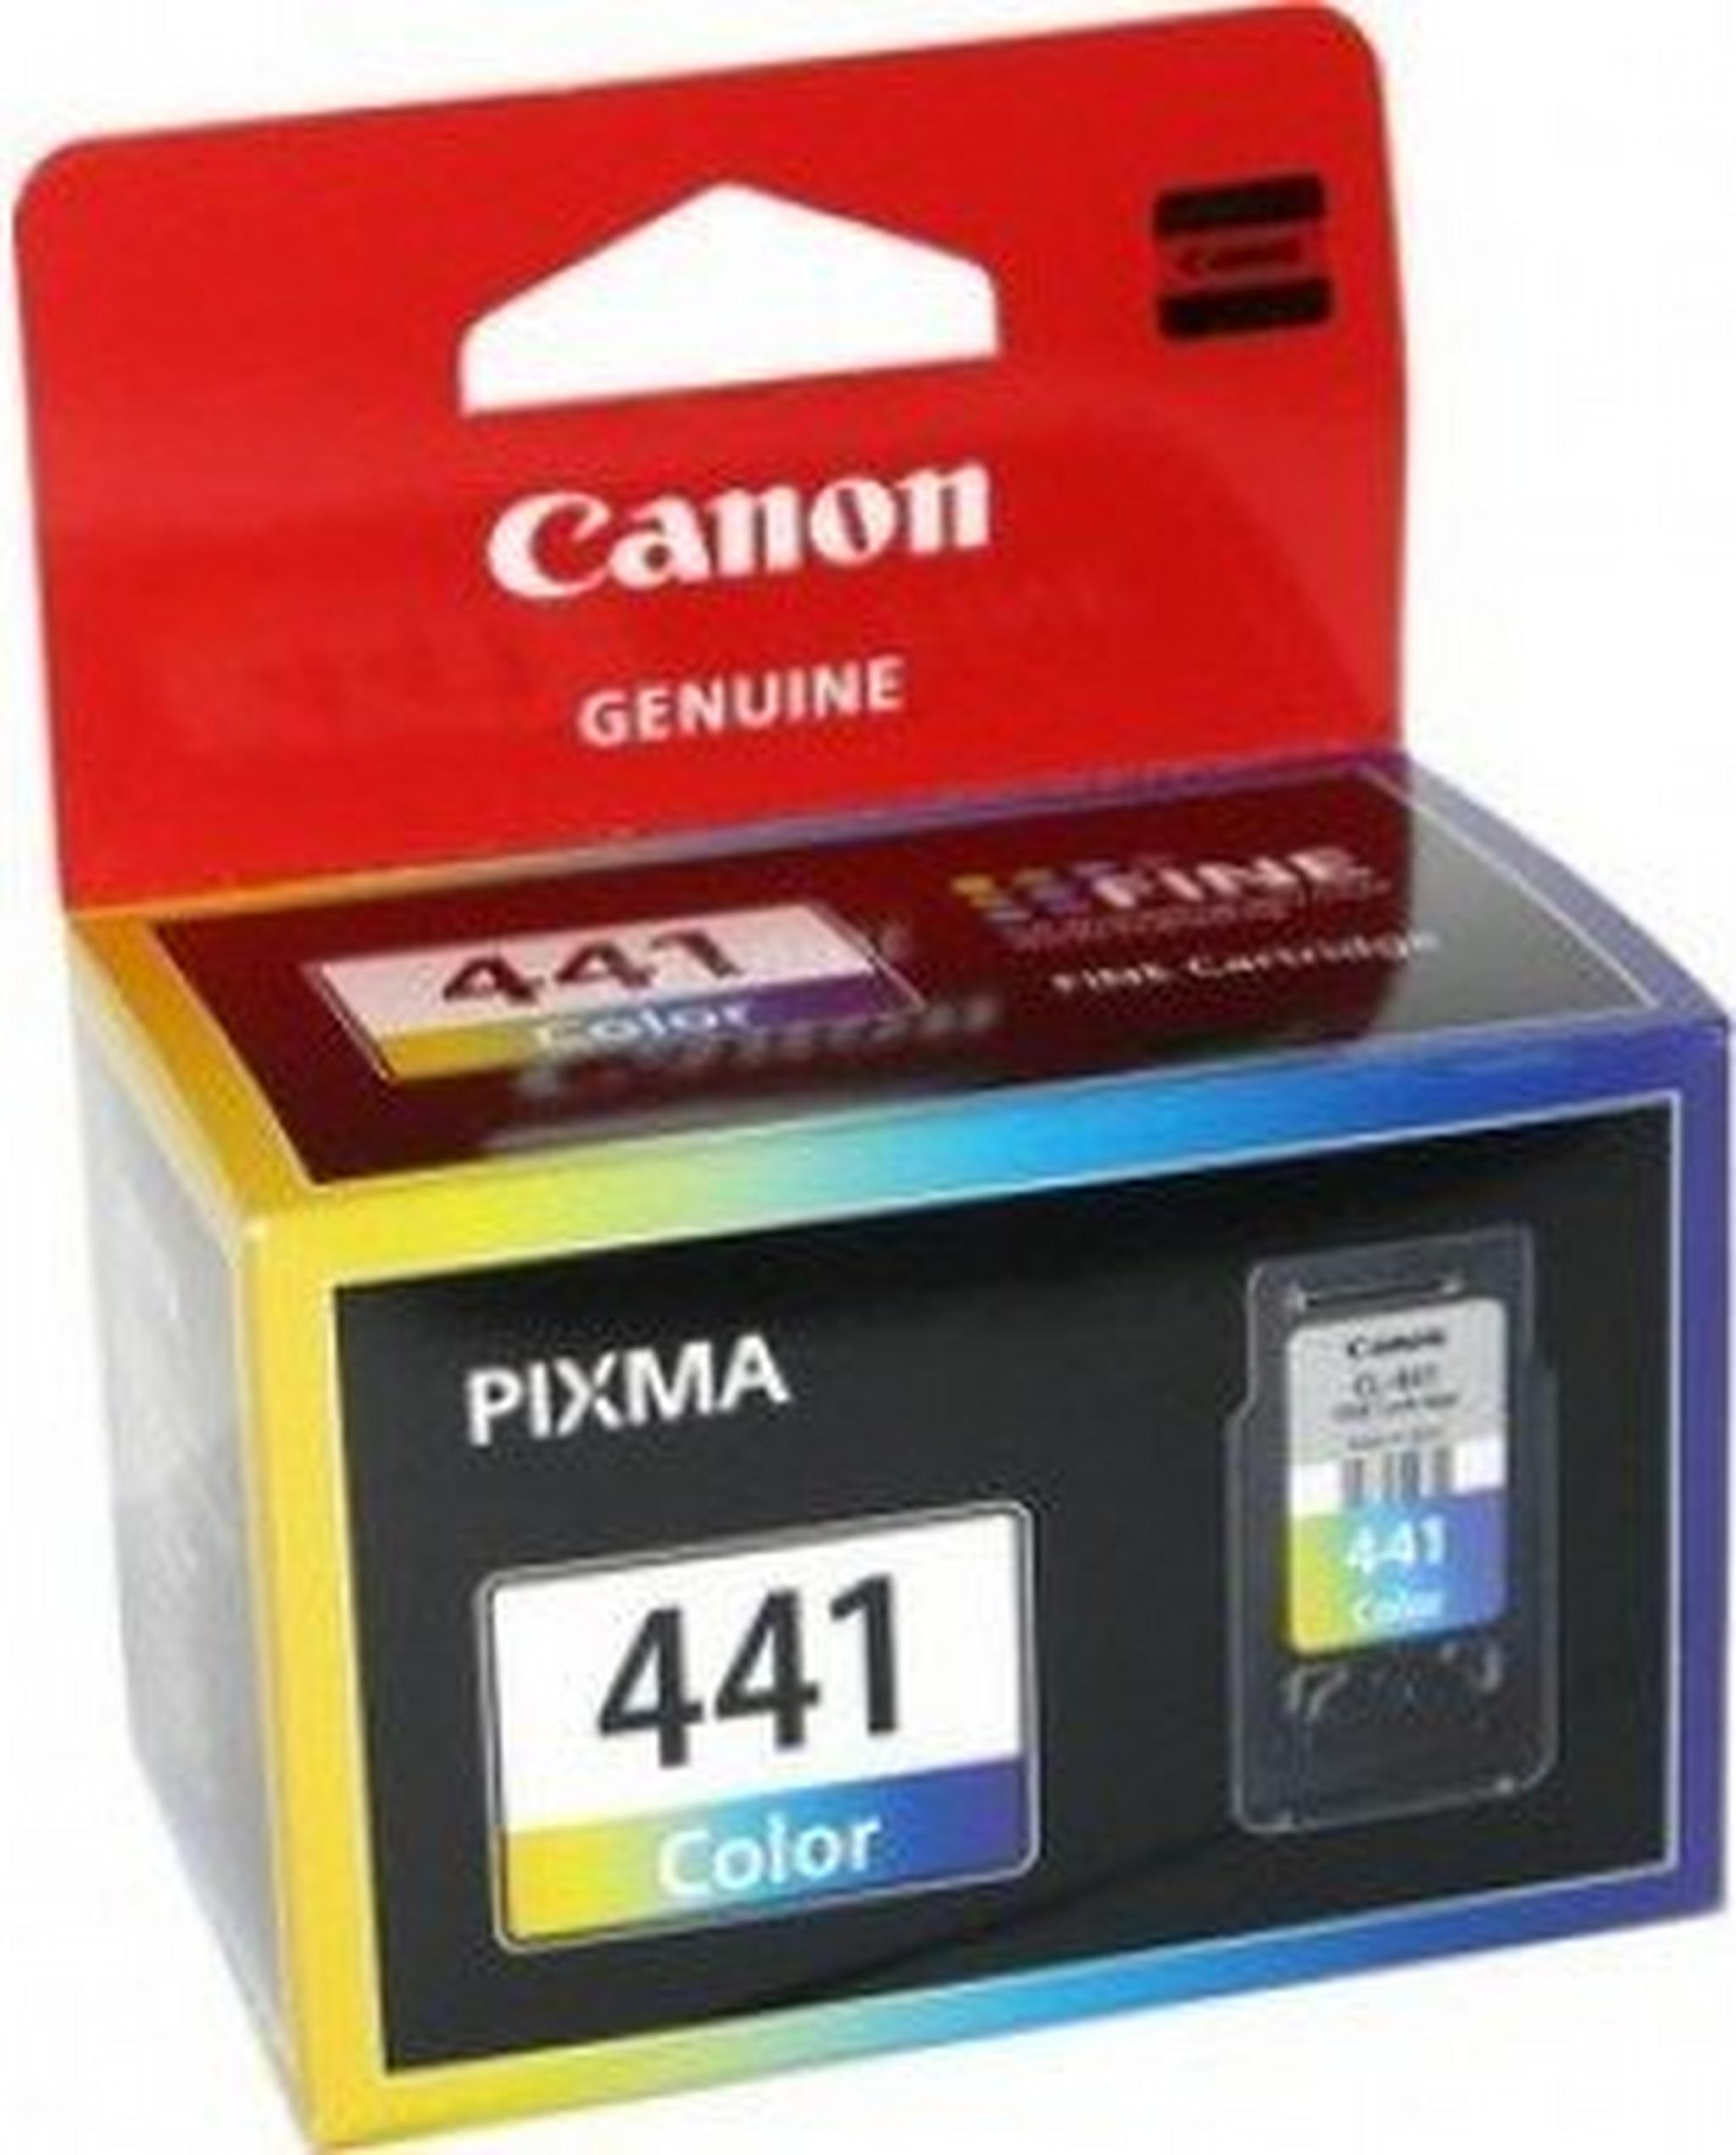 Canon CL-441 Inkjet Cartridges - Black